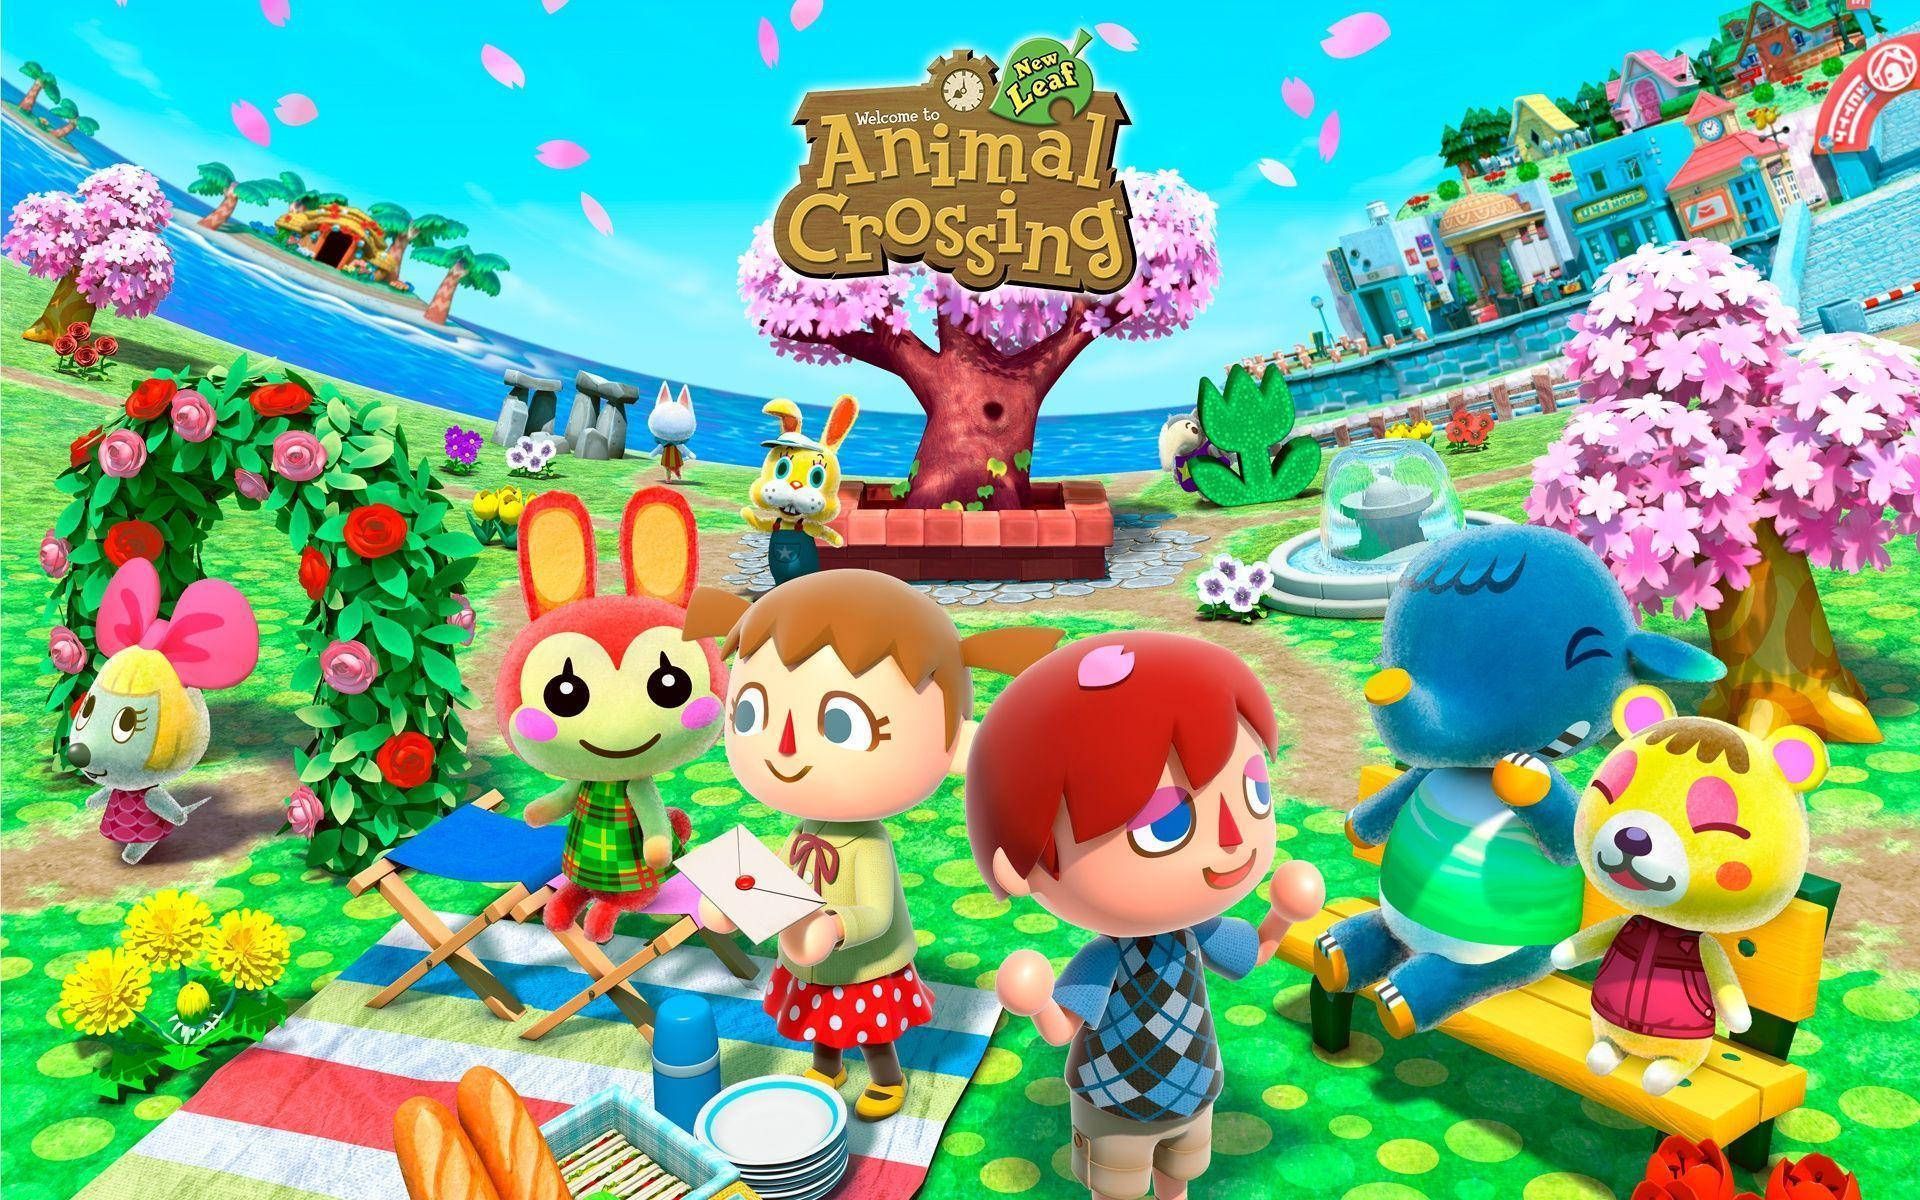 Free Animal Crossing Wallpaper Downloads, Animal Crossing Wallpaper for FREE